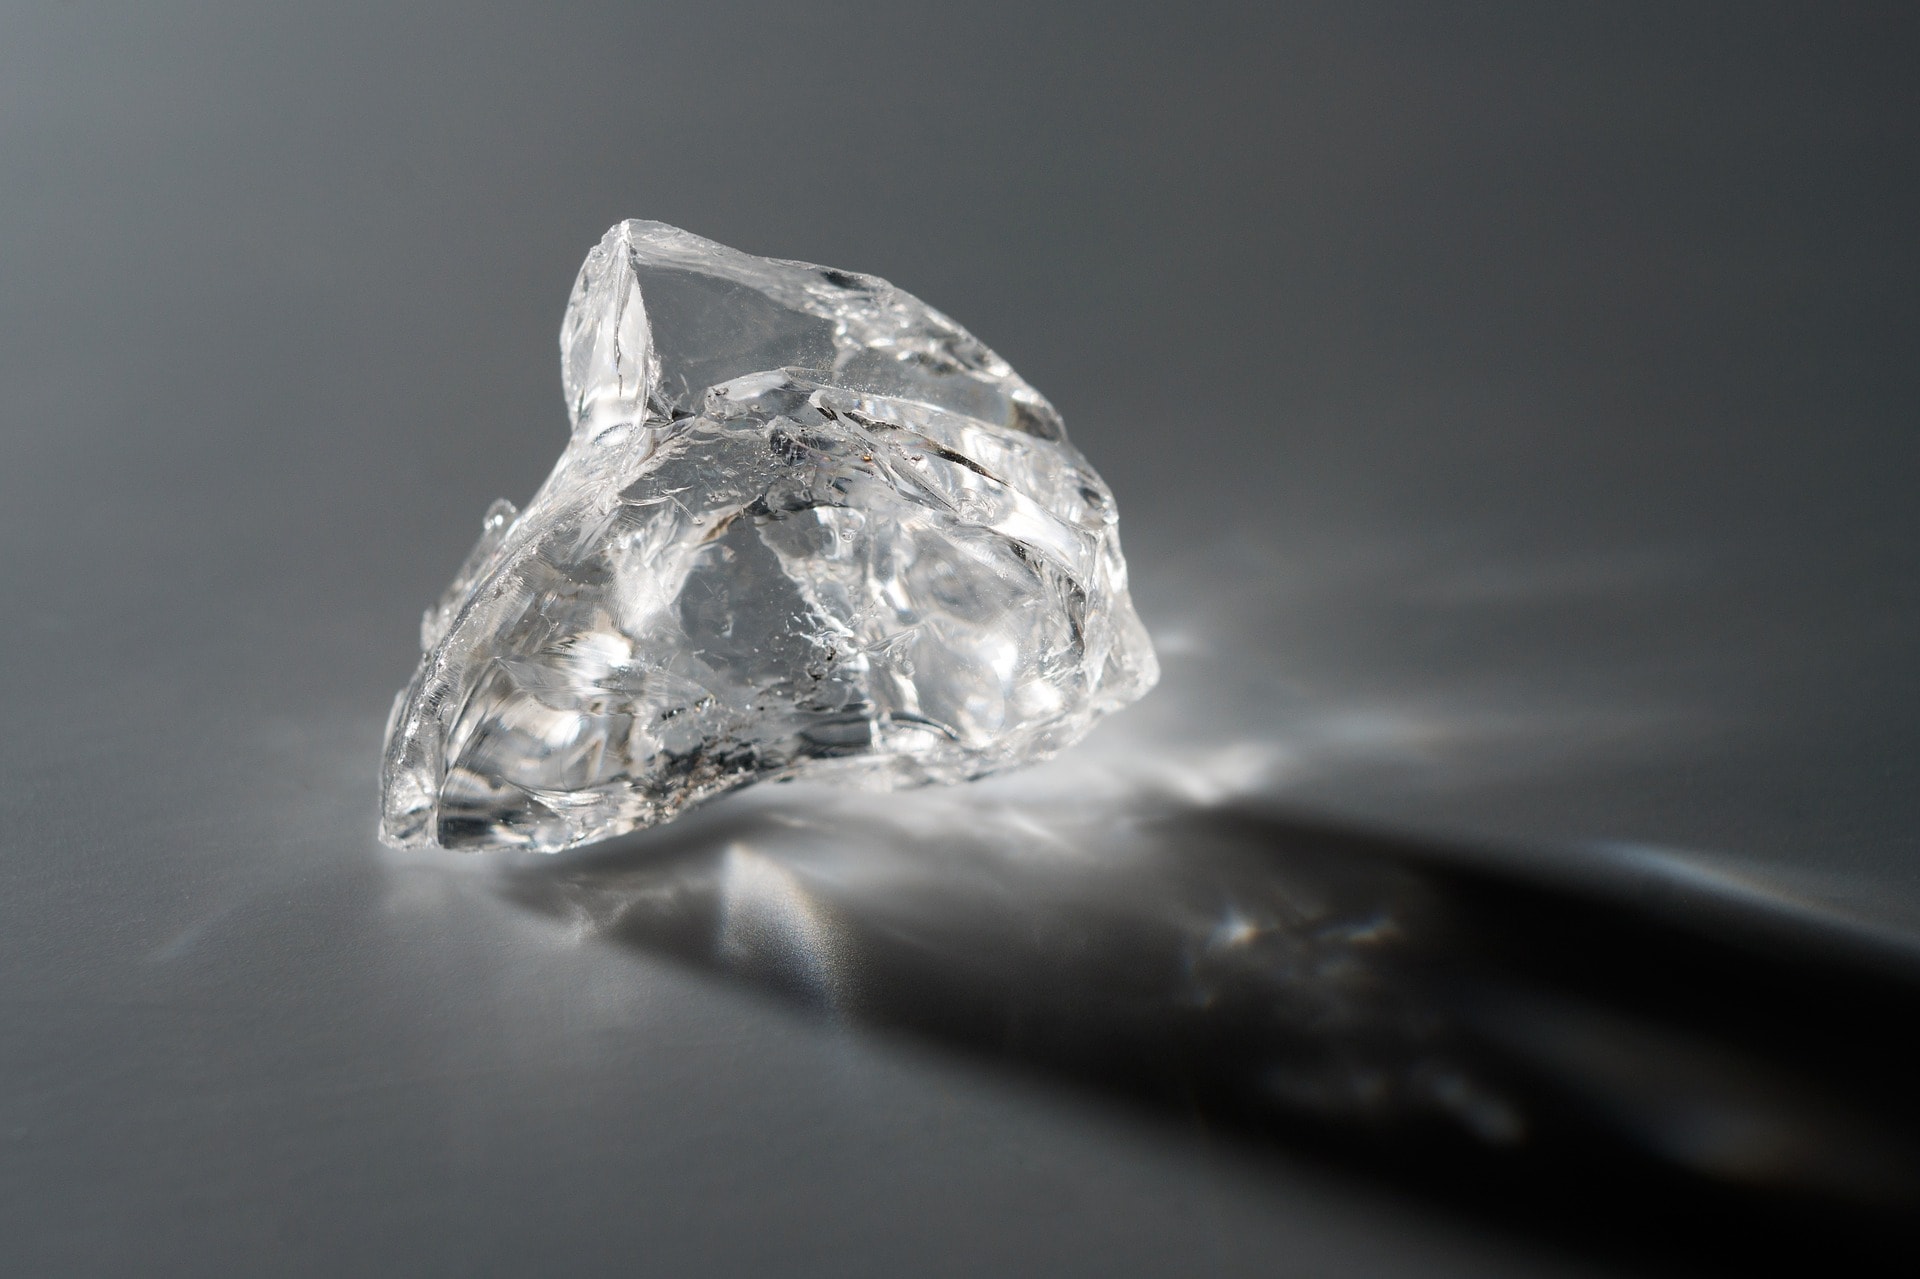 Rough Diamond Natural Loose Raw Diamond For Engagement RingRaw Stone Jewelry